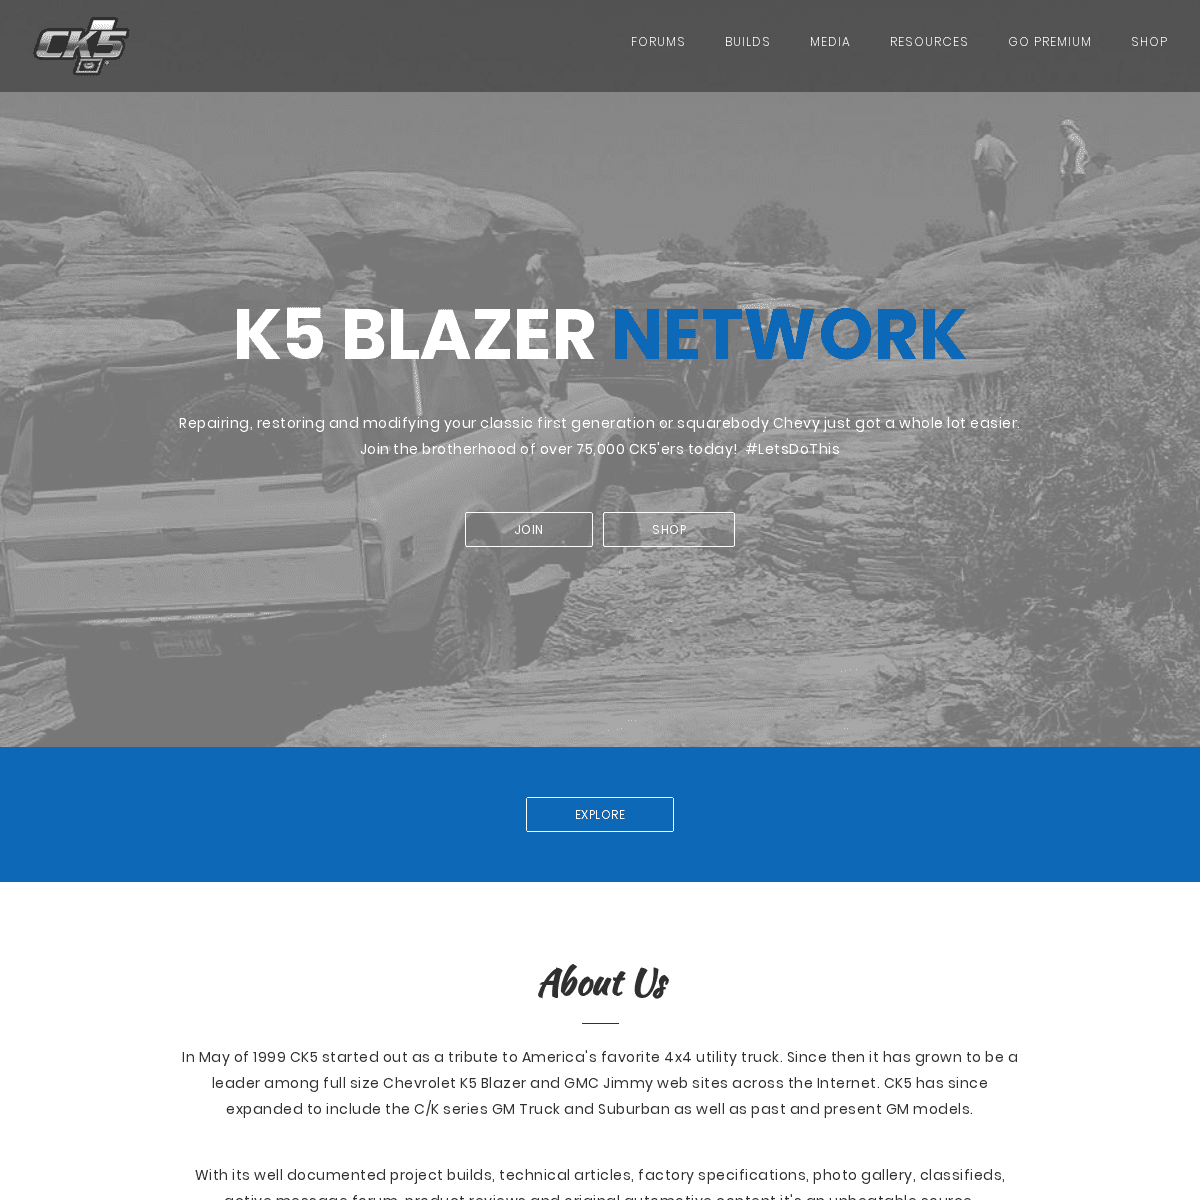 A complete backup of ck5.com